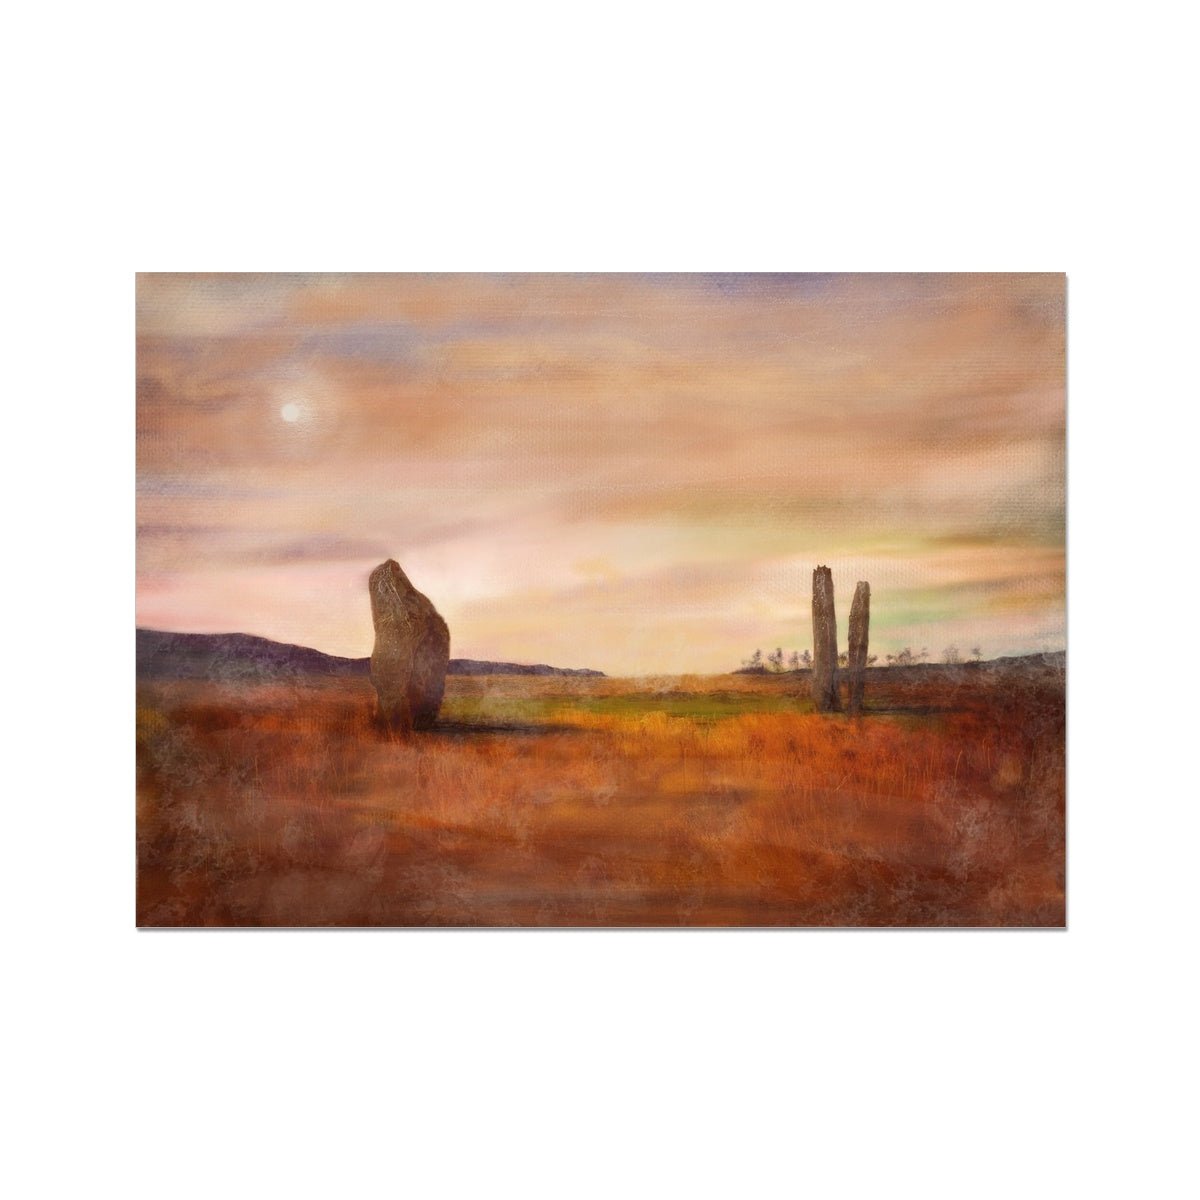 Machrie Moor Moonlight Painting | Fine Art Prints From Scotland-Unframed Prints-Arran Art Gallery-A2 Landscape-Paintings, Prints, Homeware, Art Gifts From Scotland By Scottish Artist Kevin Hunter